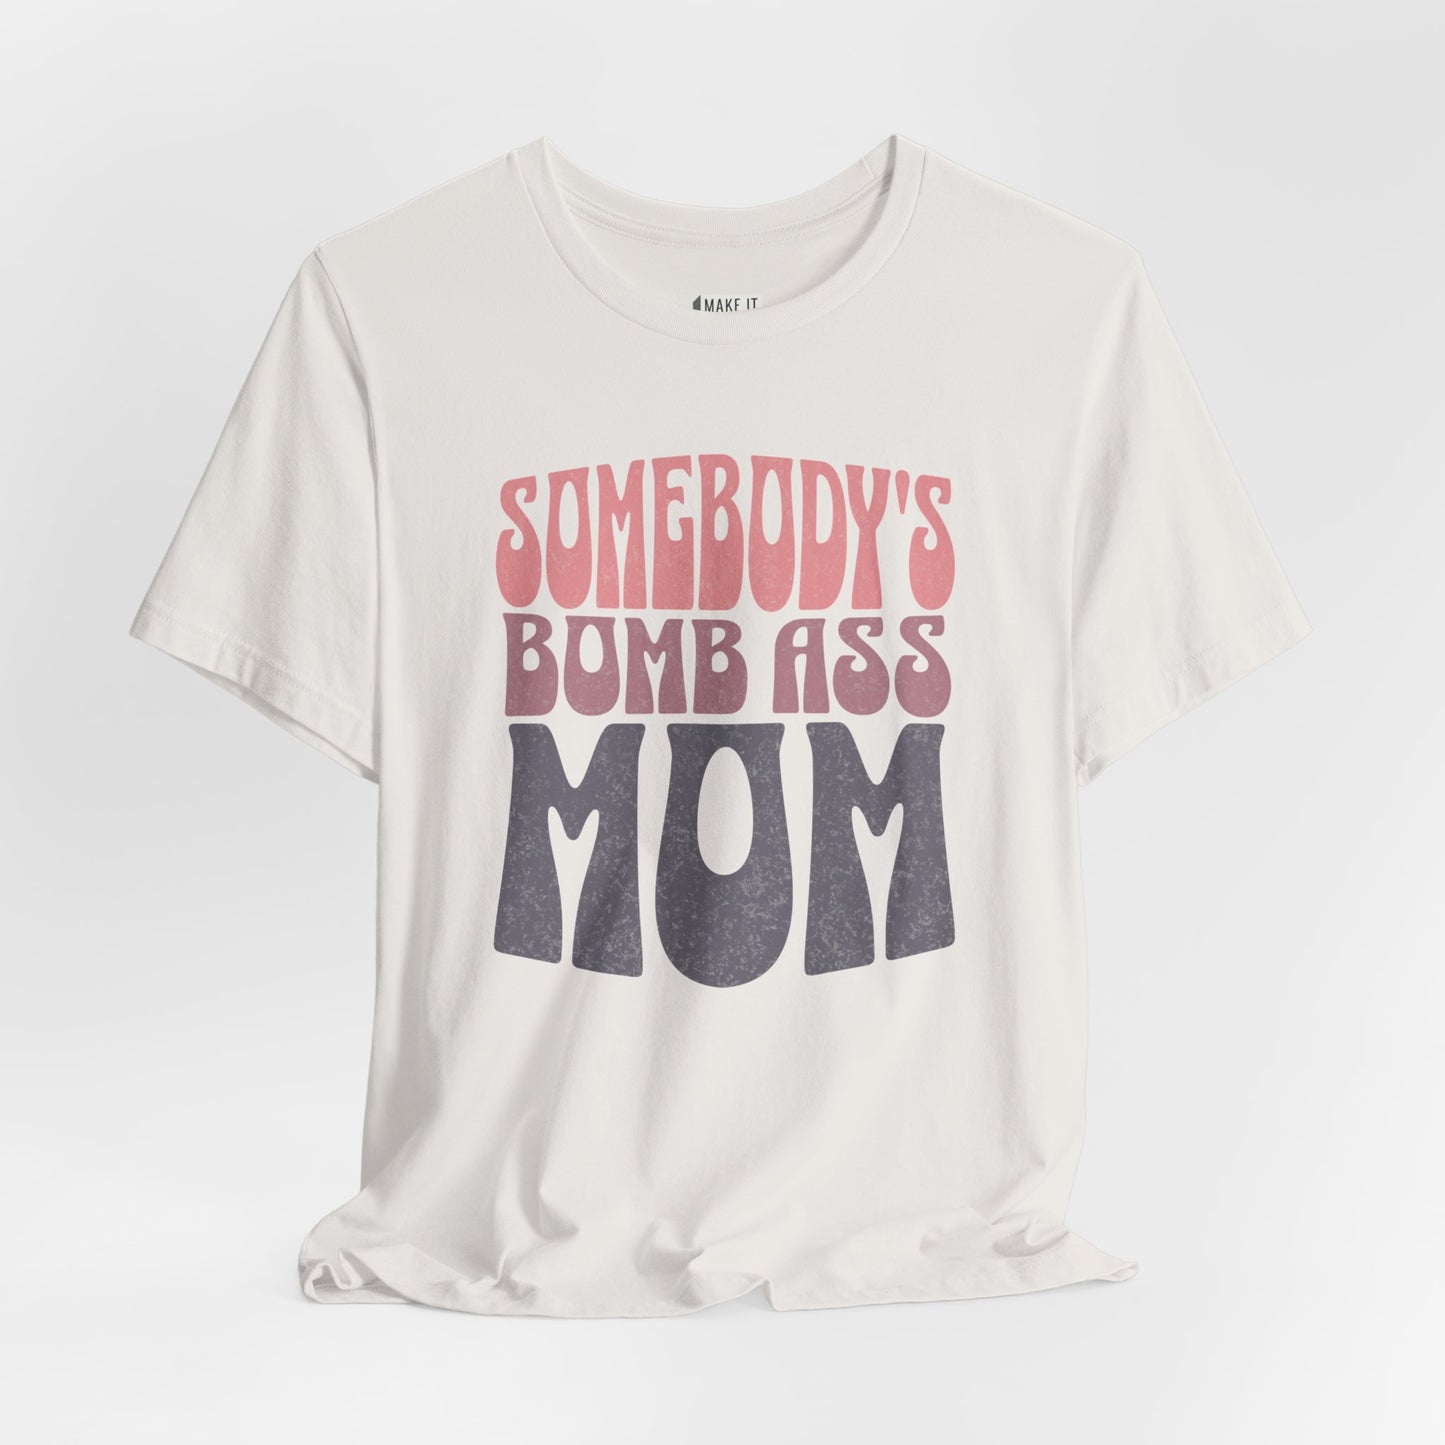 "Somebody's Bomb Ass Mom" Tee